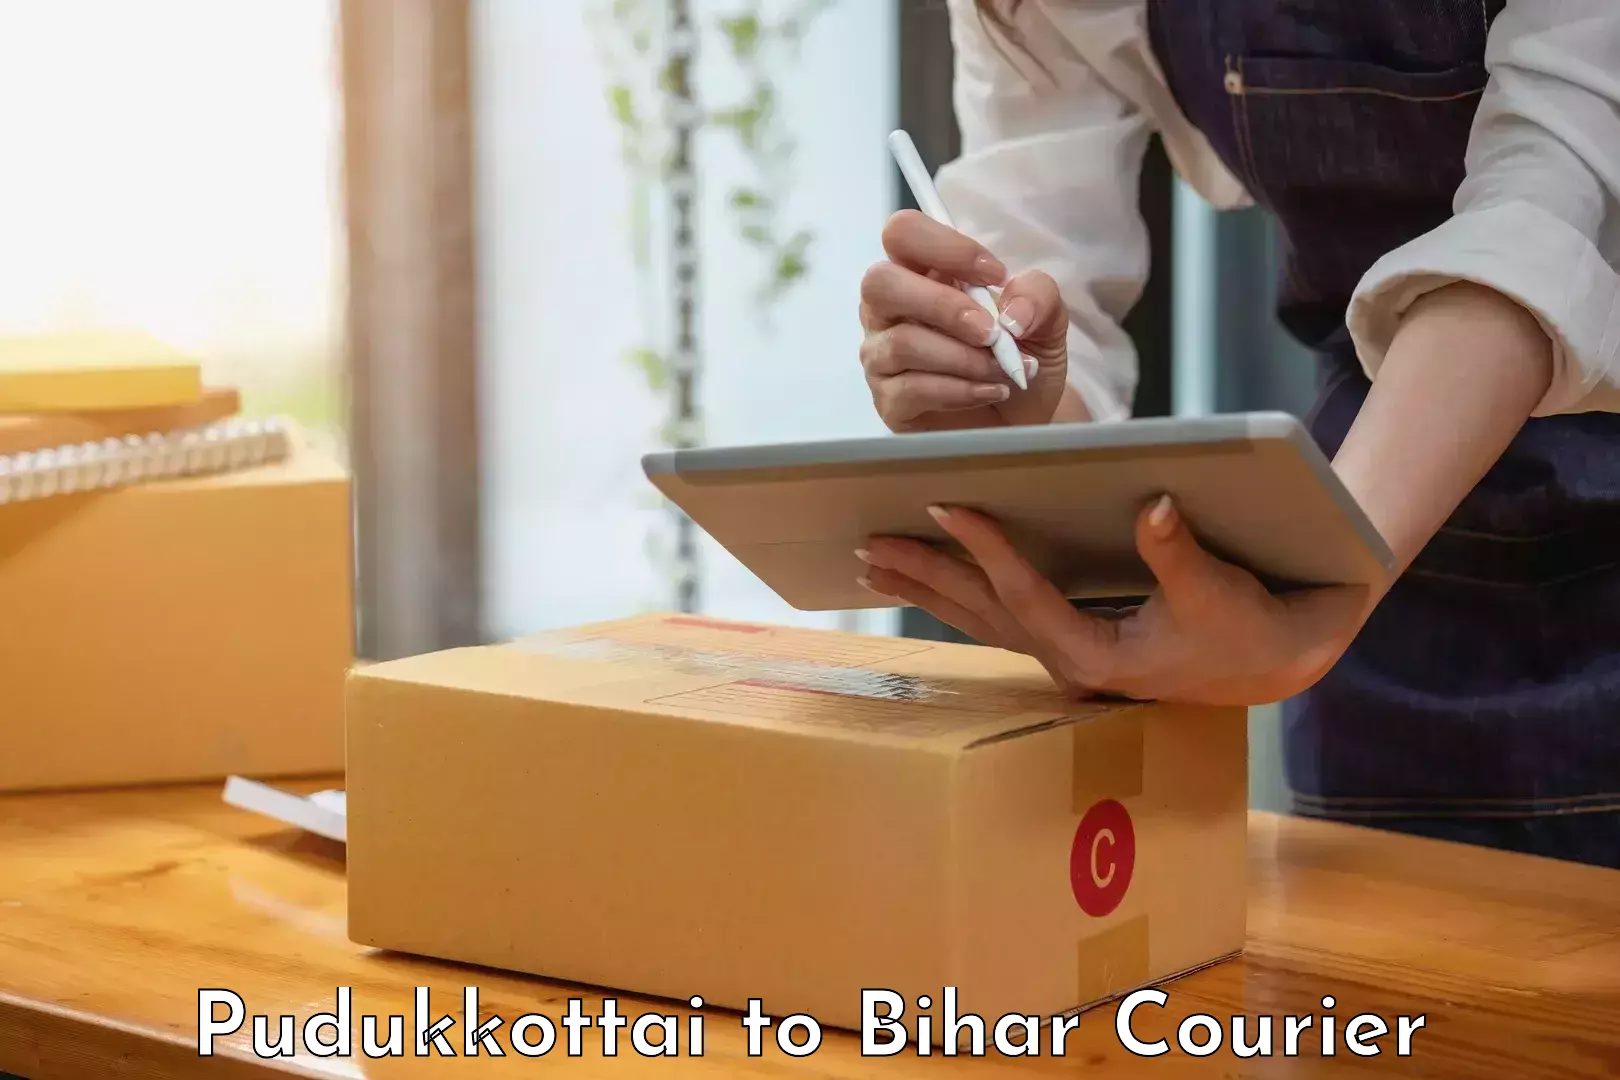 State-of-the-art courier technology Pudukkottai to Bihta